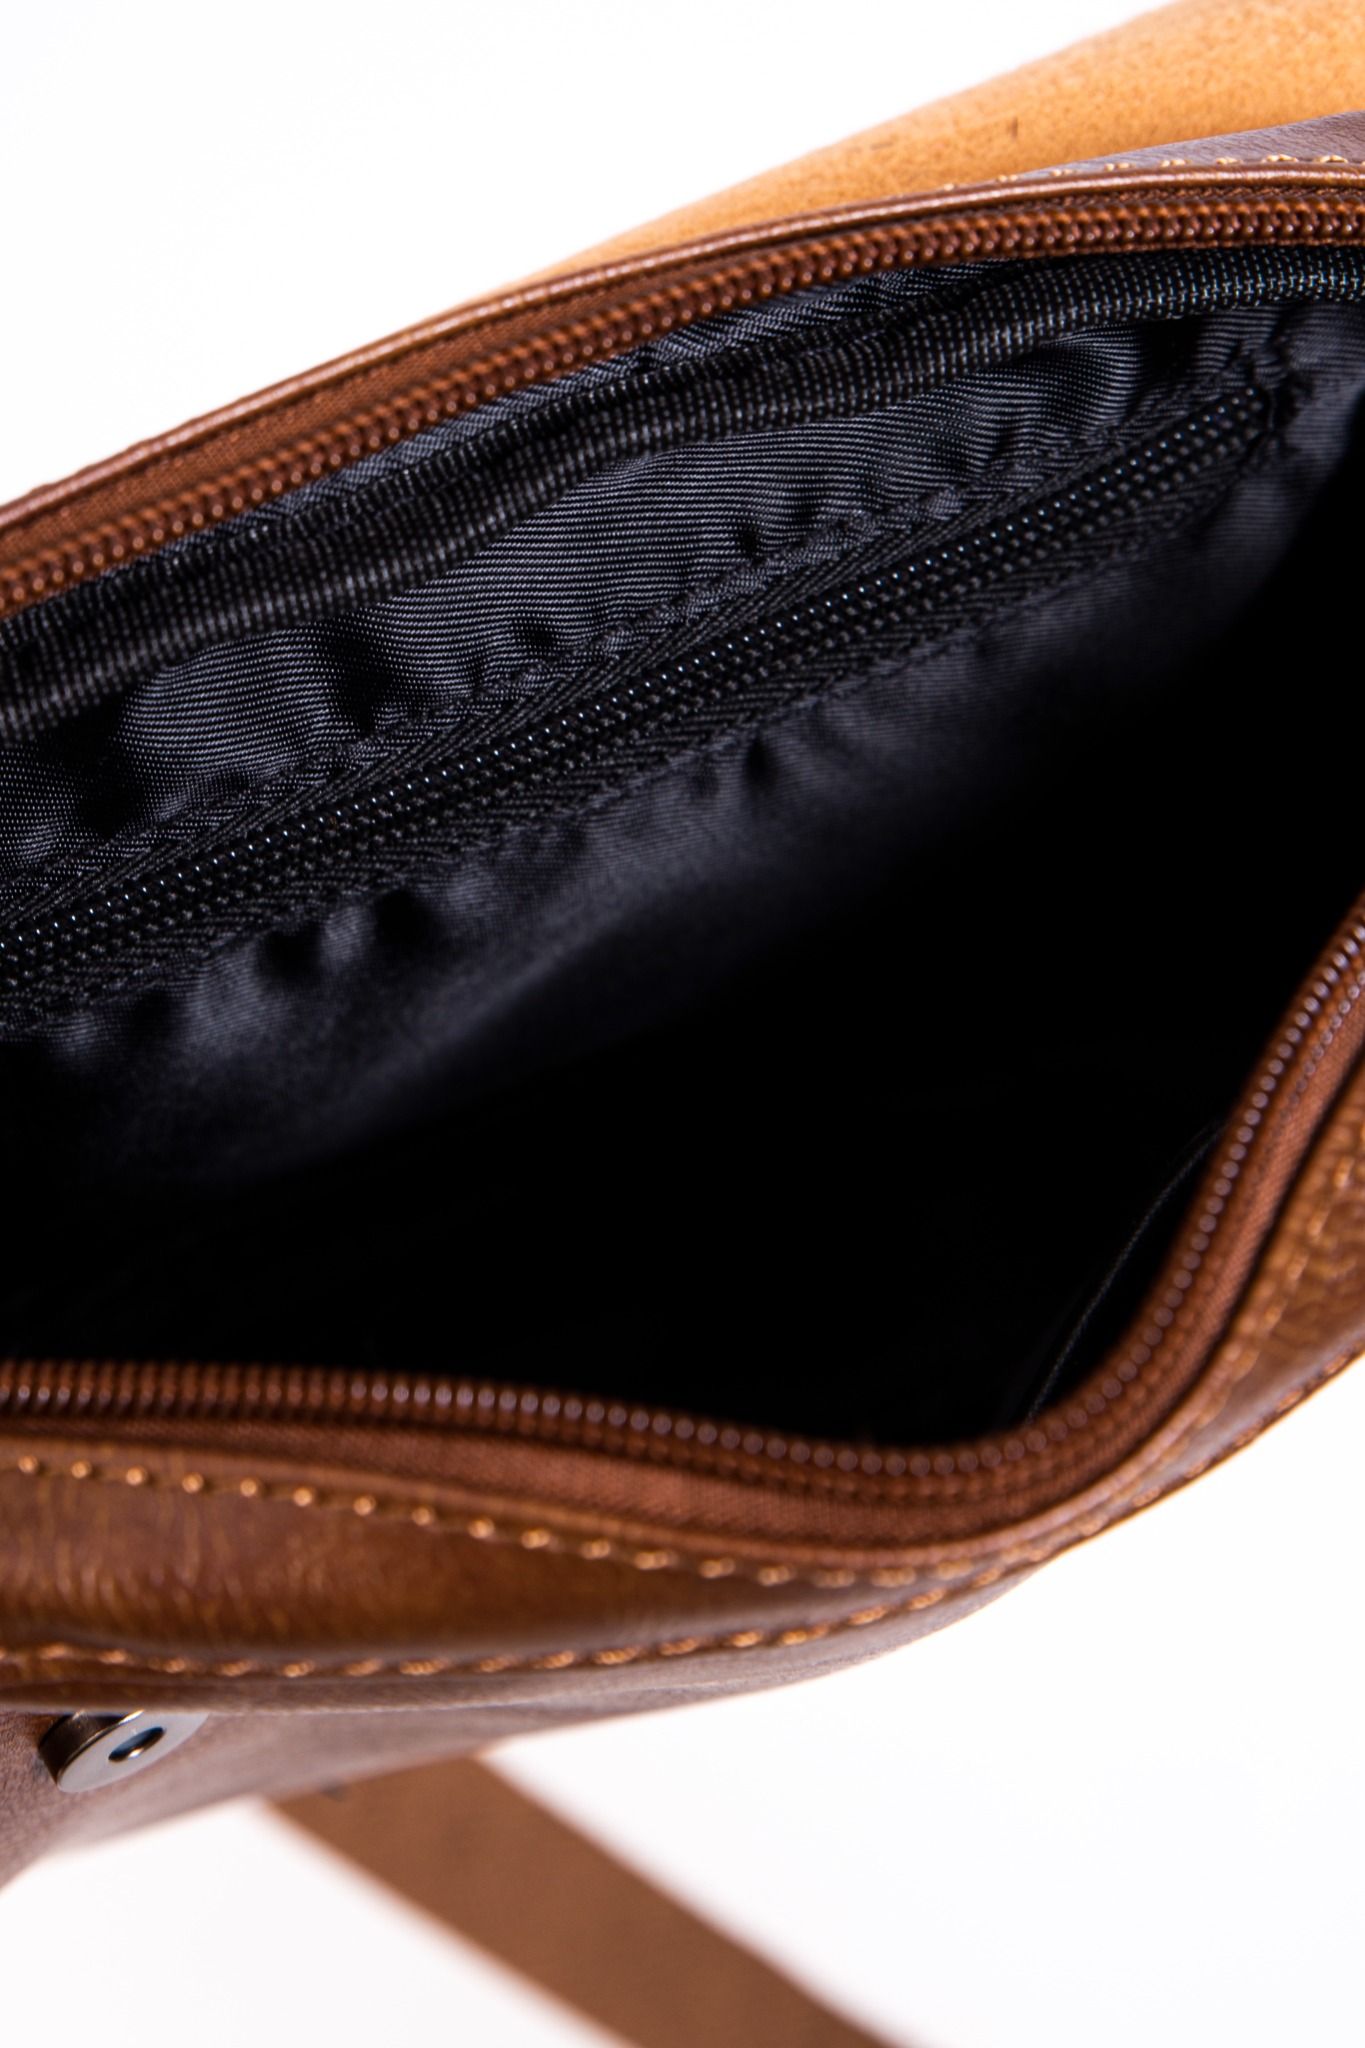  Leather Brown Bag 